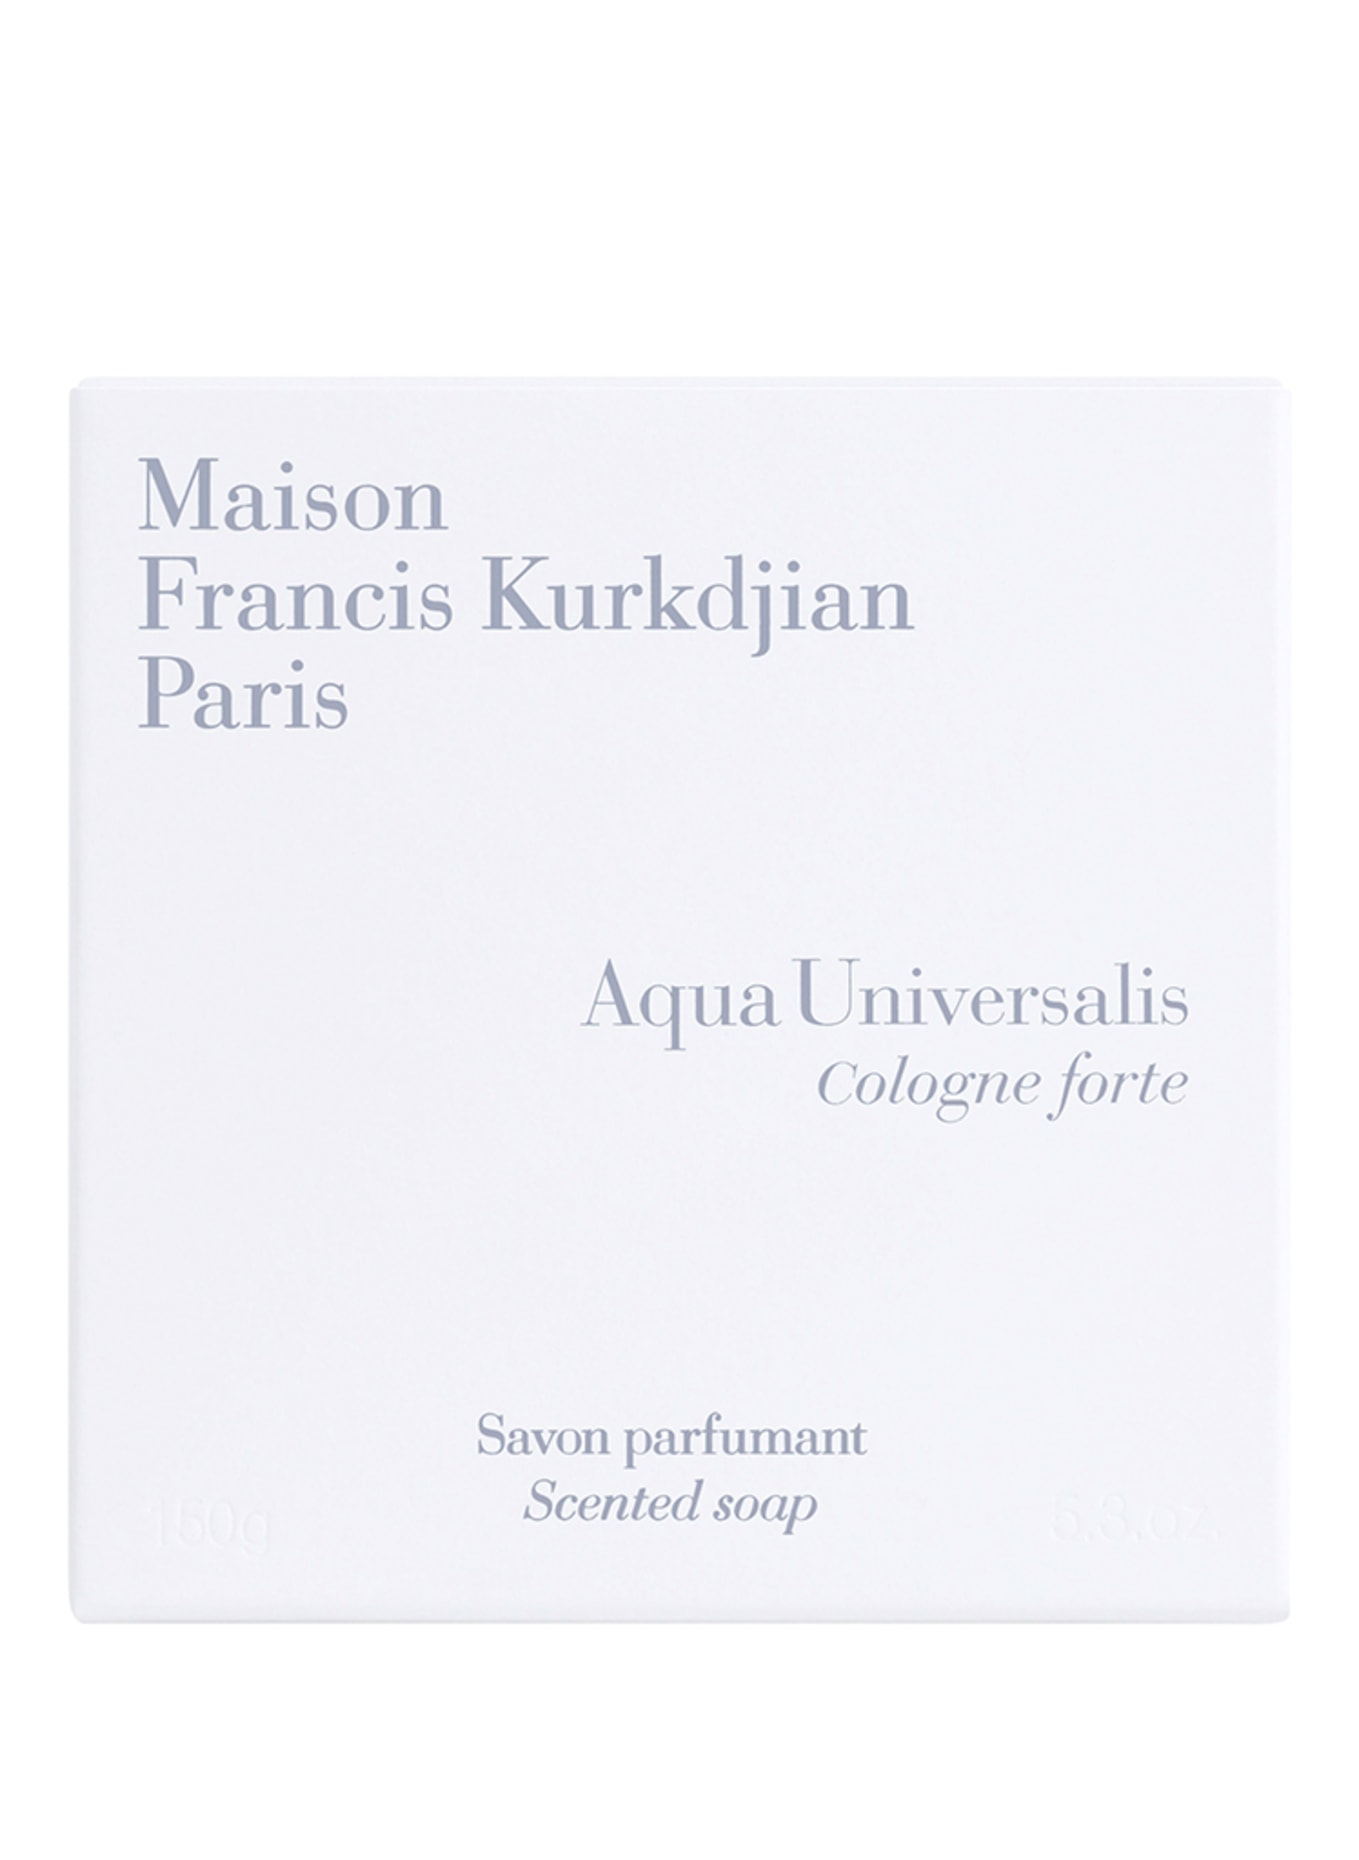 Maison Francis Kurkdjian Paris AQUA UNIVERSALIS COLOGNE FORTE (Obrazek 2)